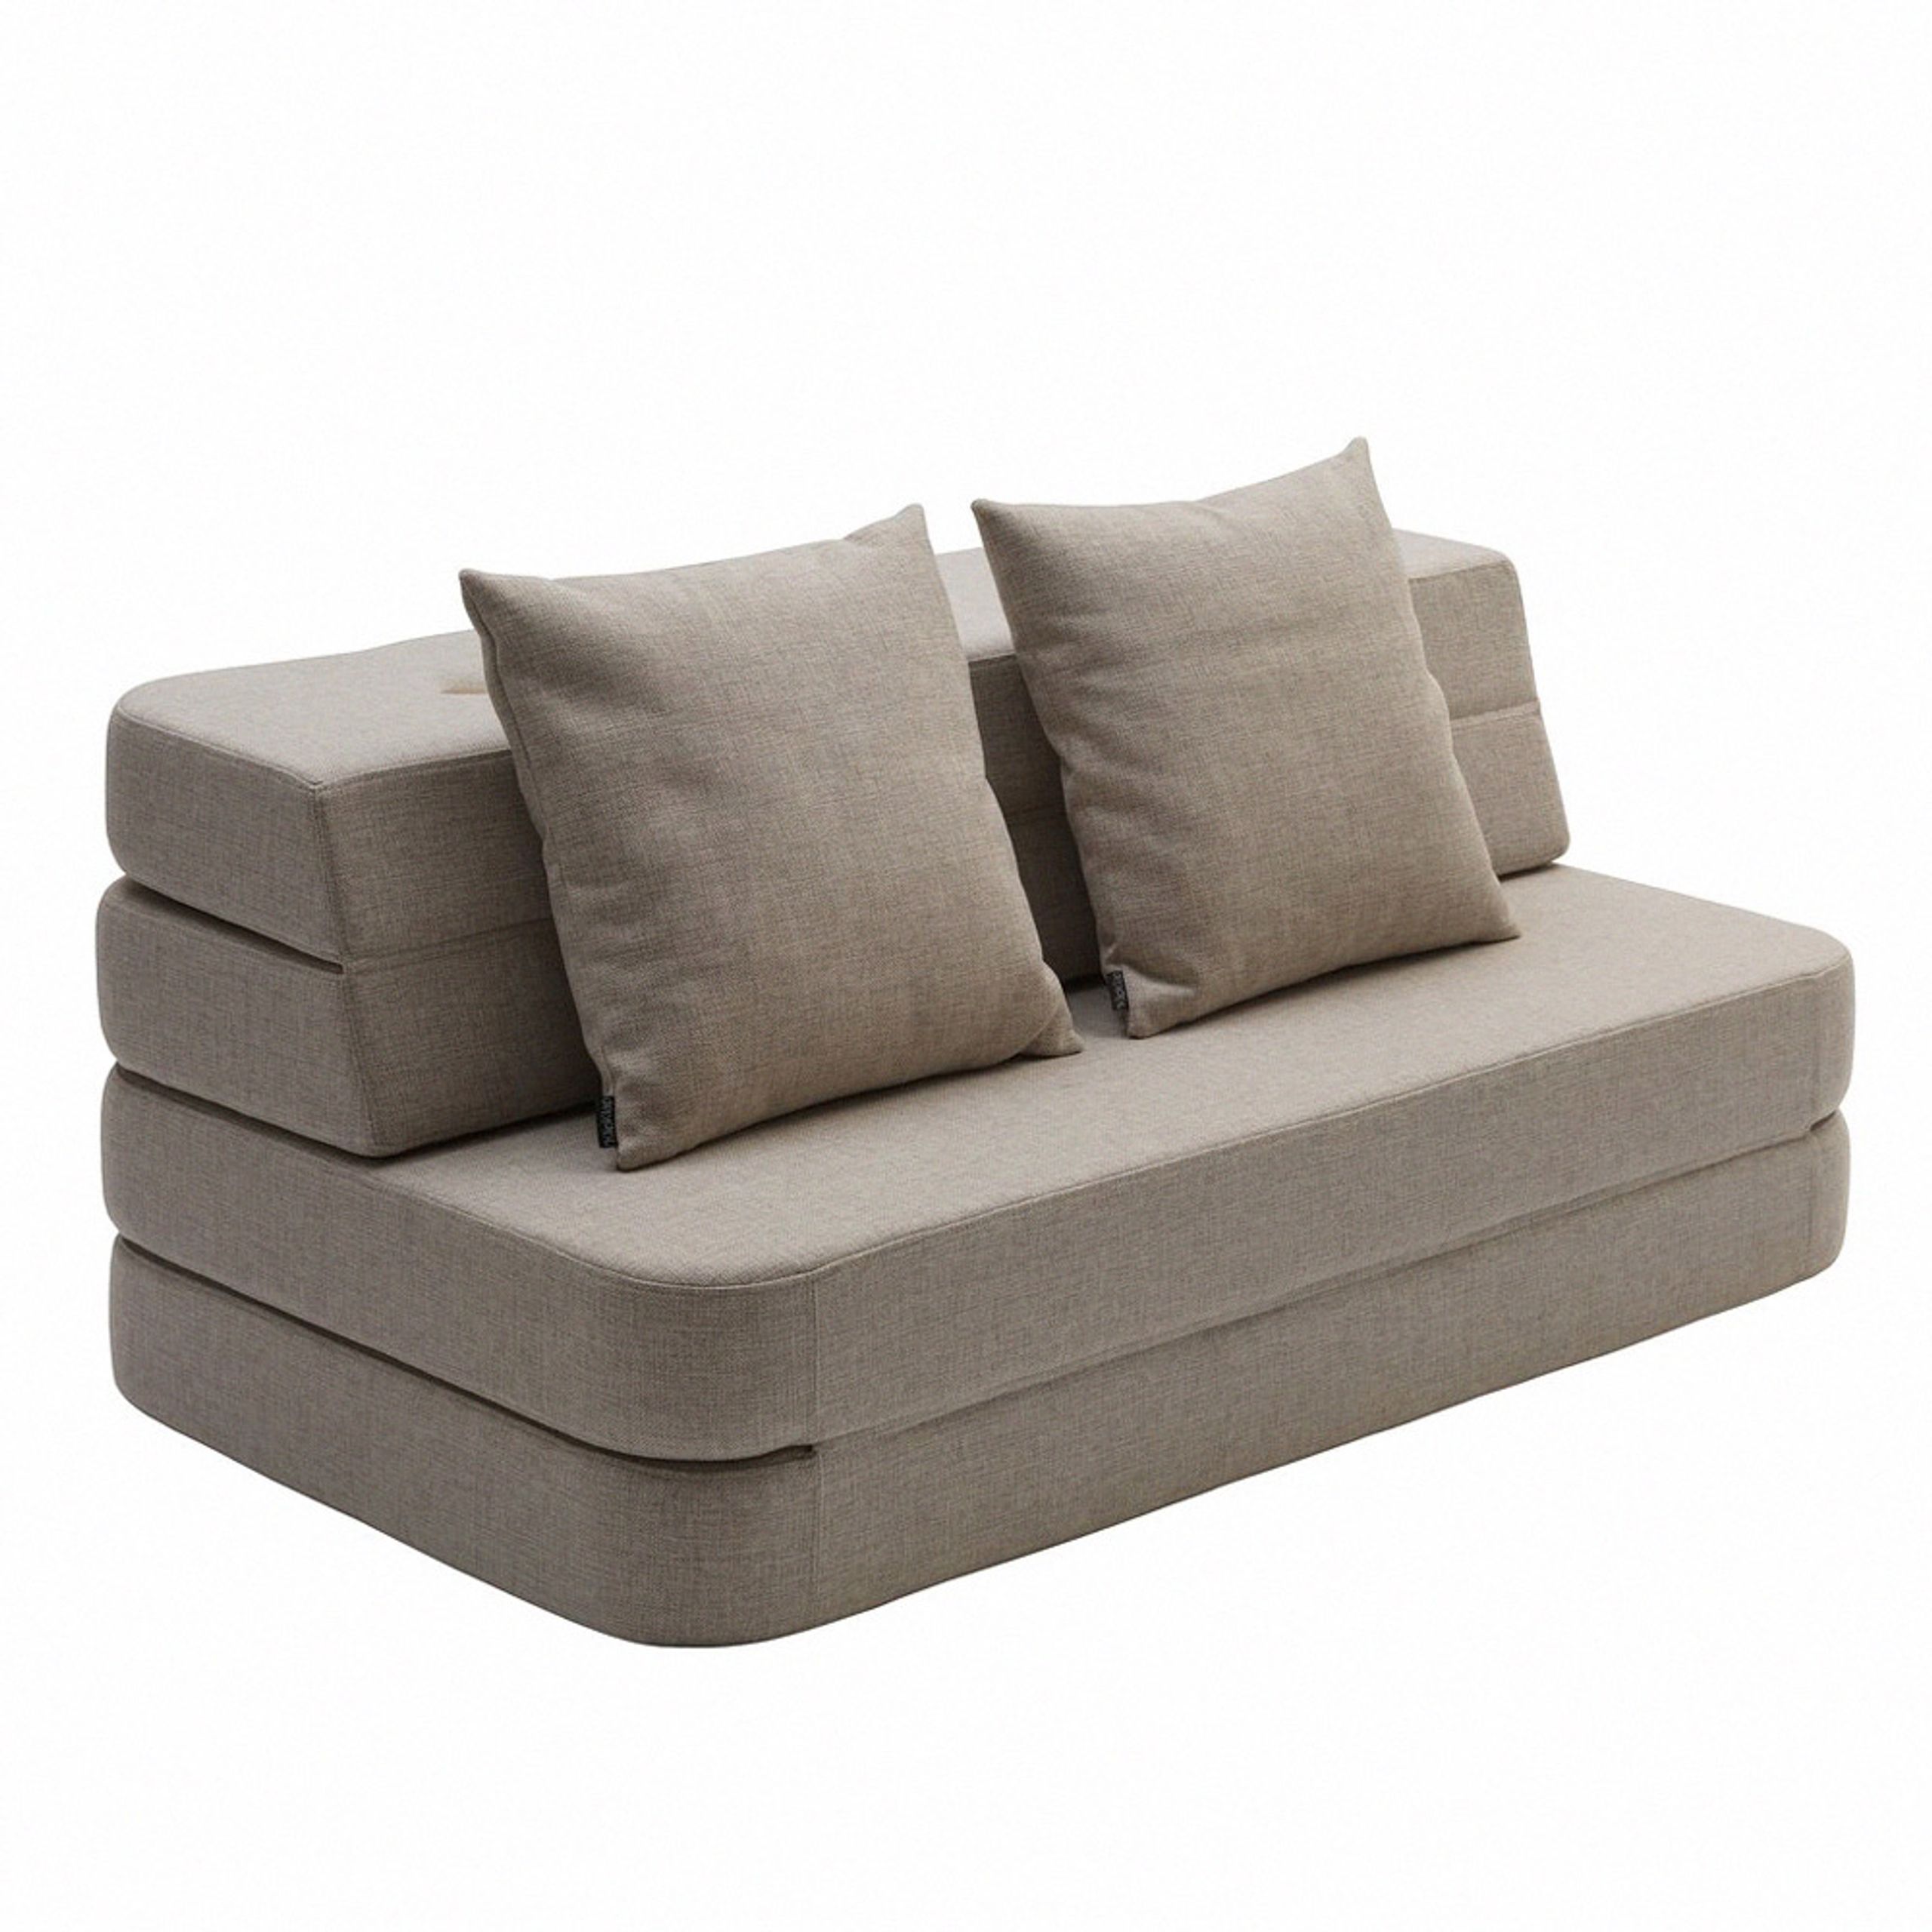 By KlipKlap - Canapé - KK 3 fold sofa w. buttons - XL - Beige w/ Sand